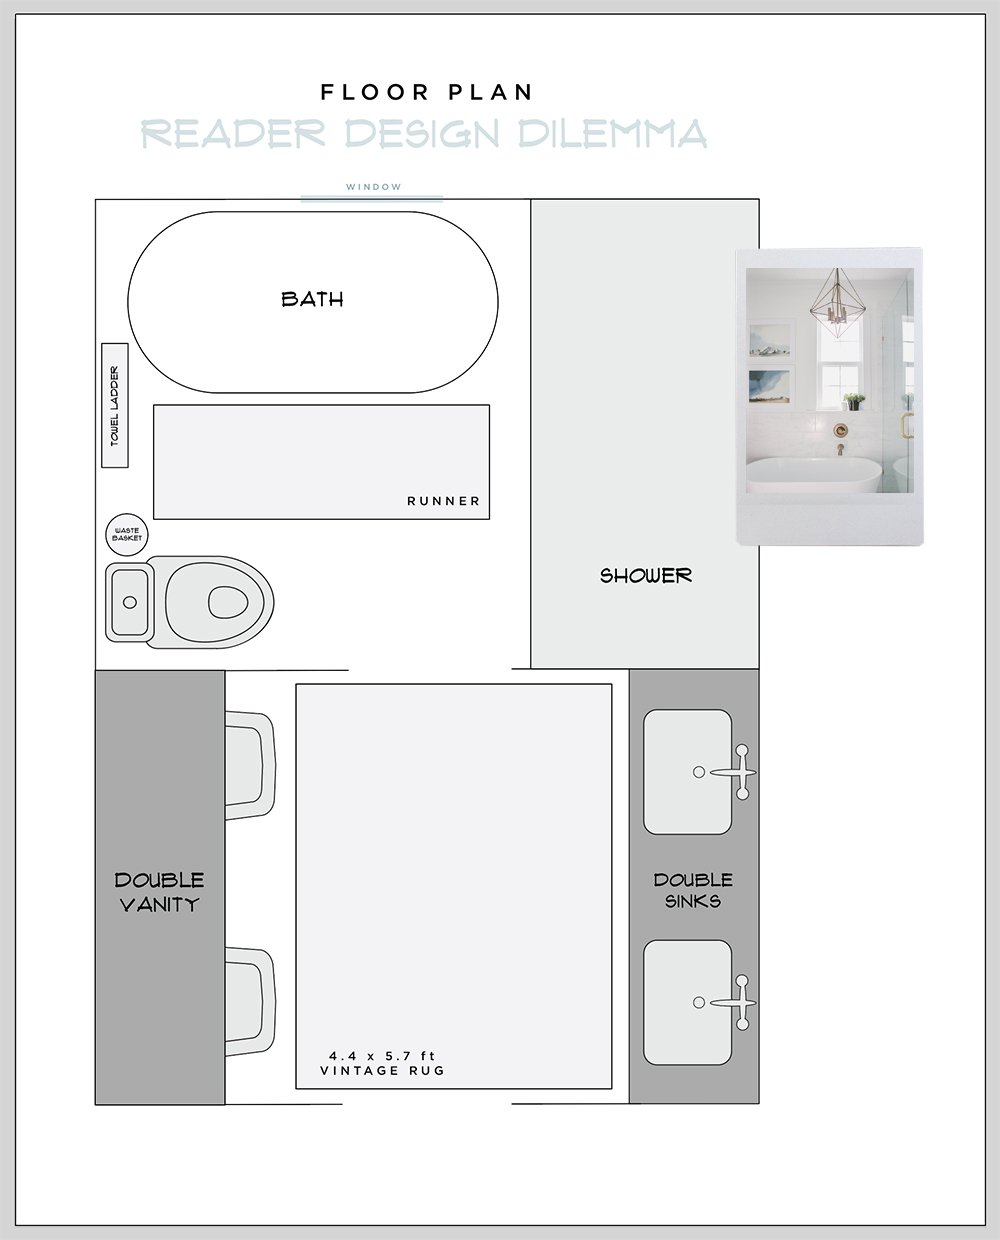 Designer Trick : Floor Planning - roomfortuesday.com